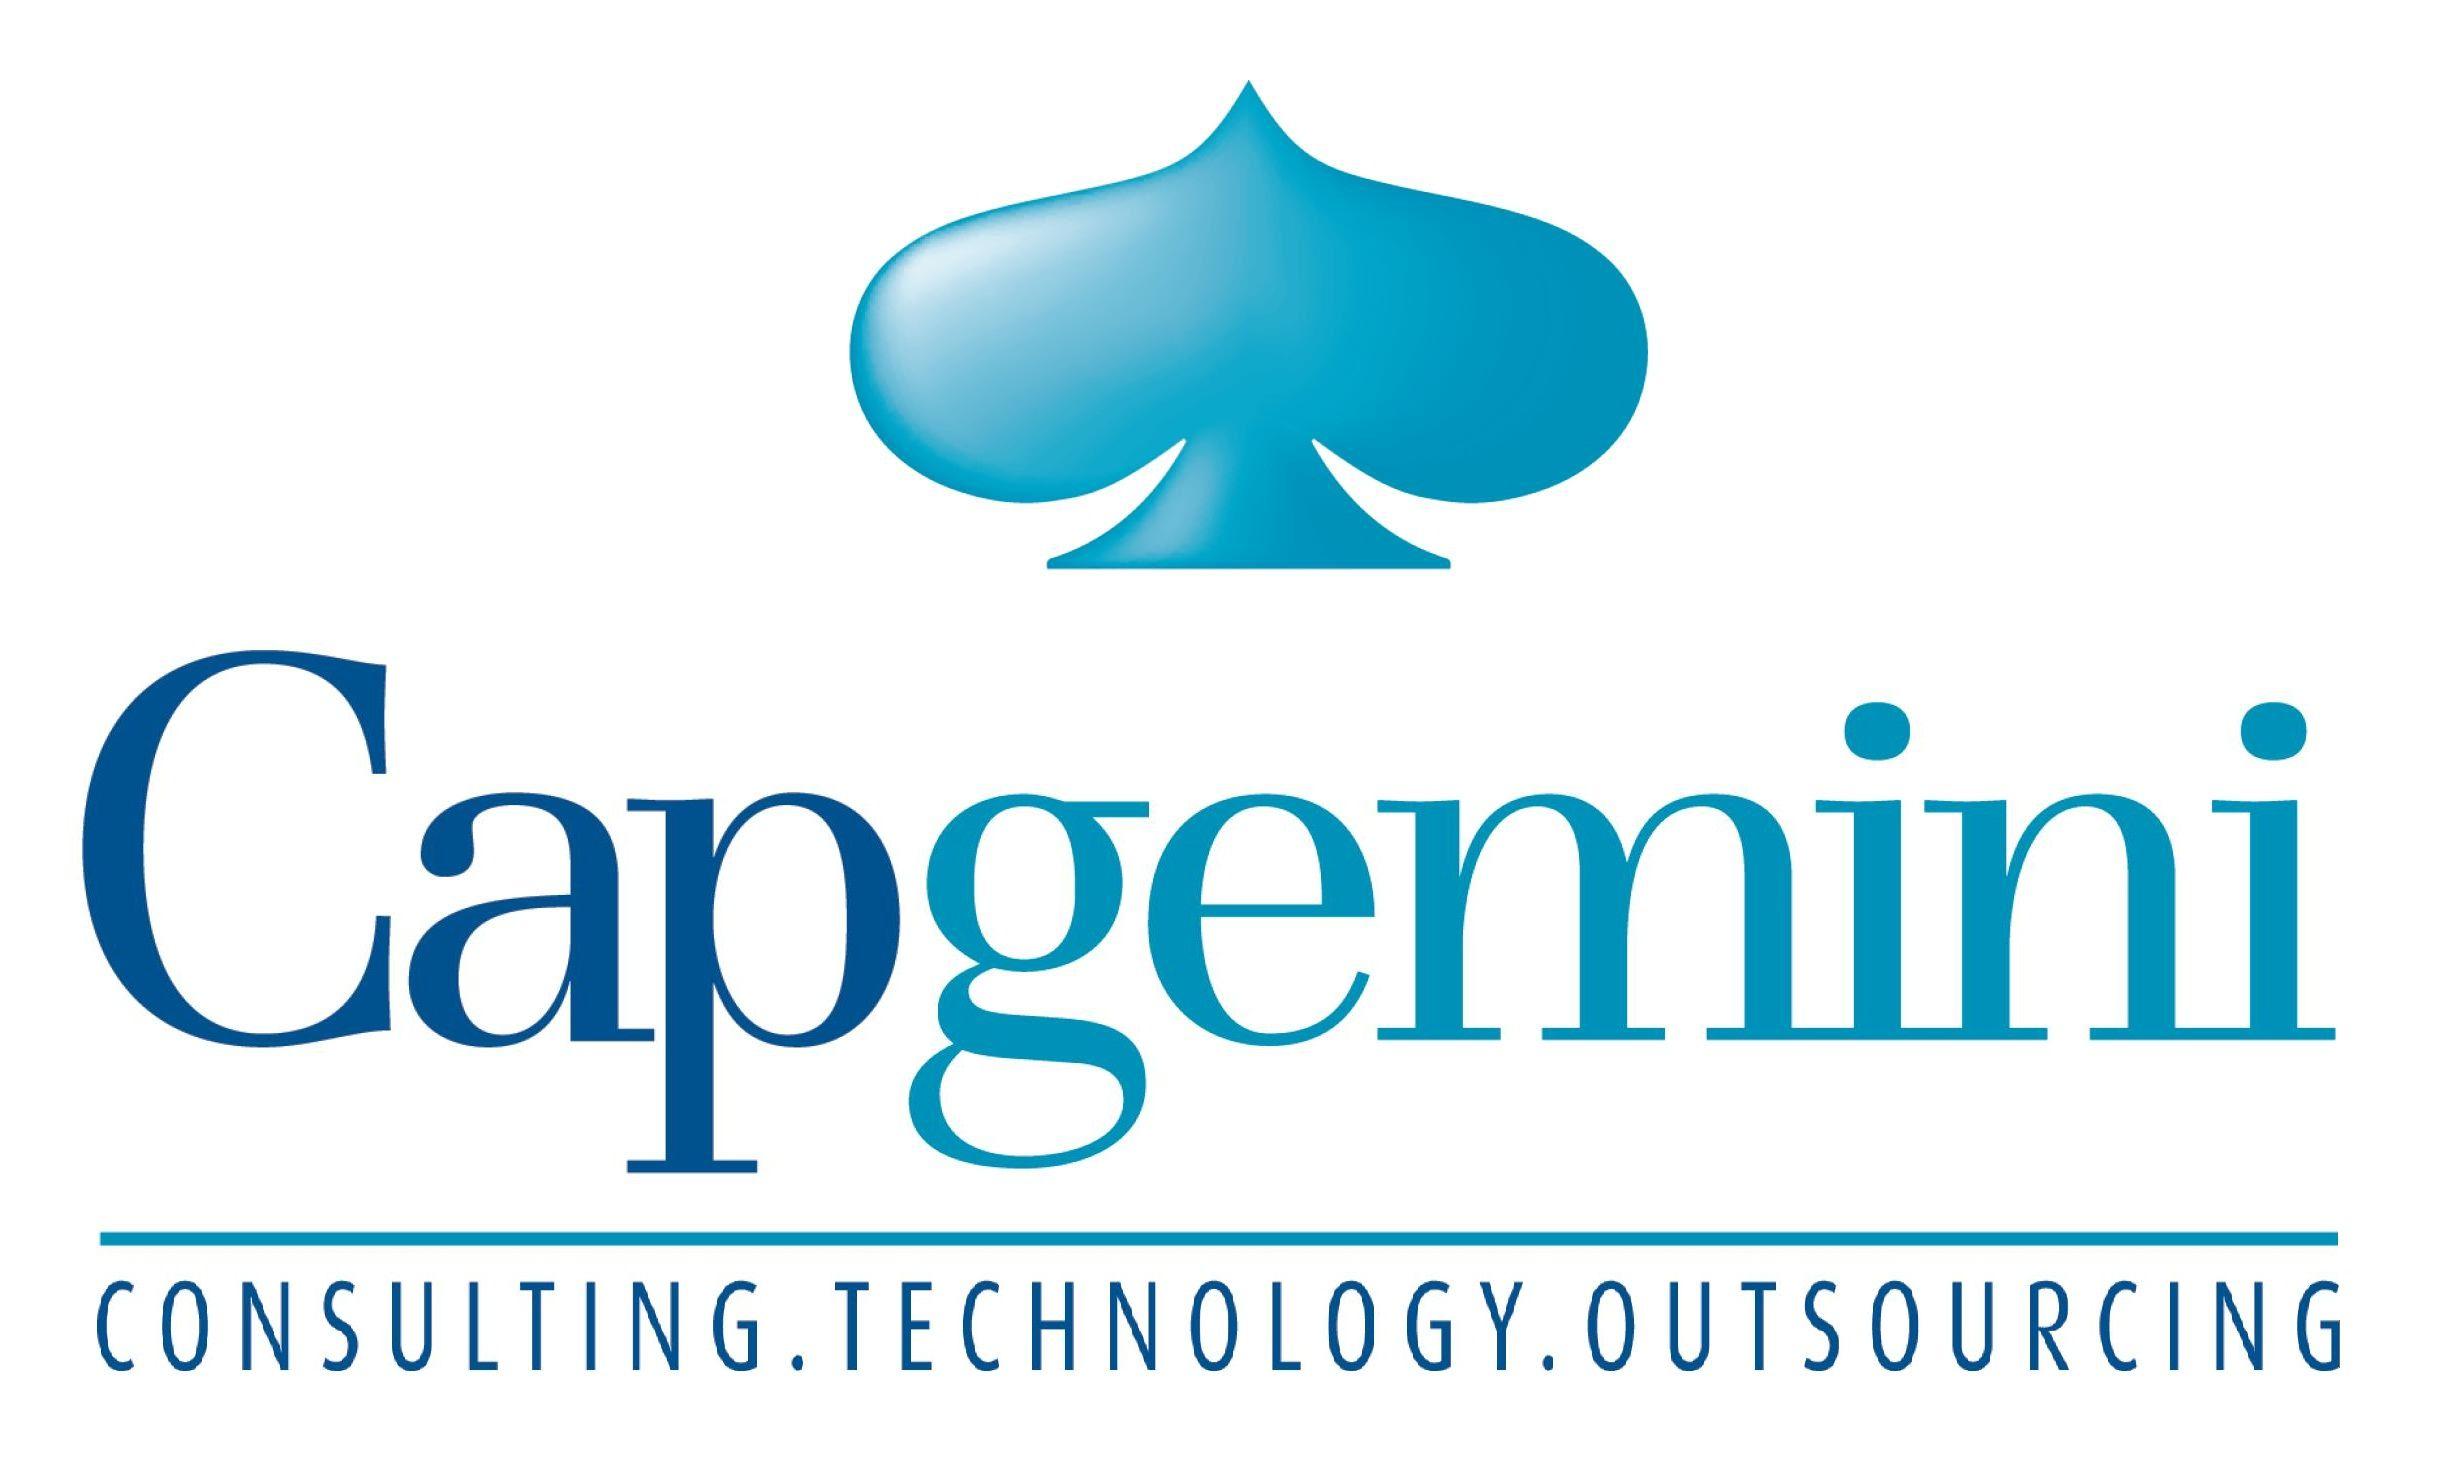 Capgemini Logo - Capgemini Logo 1